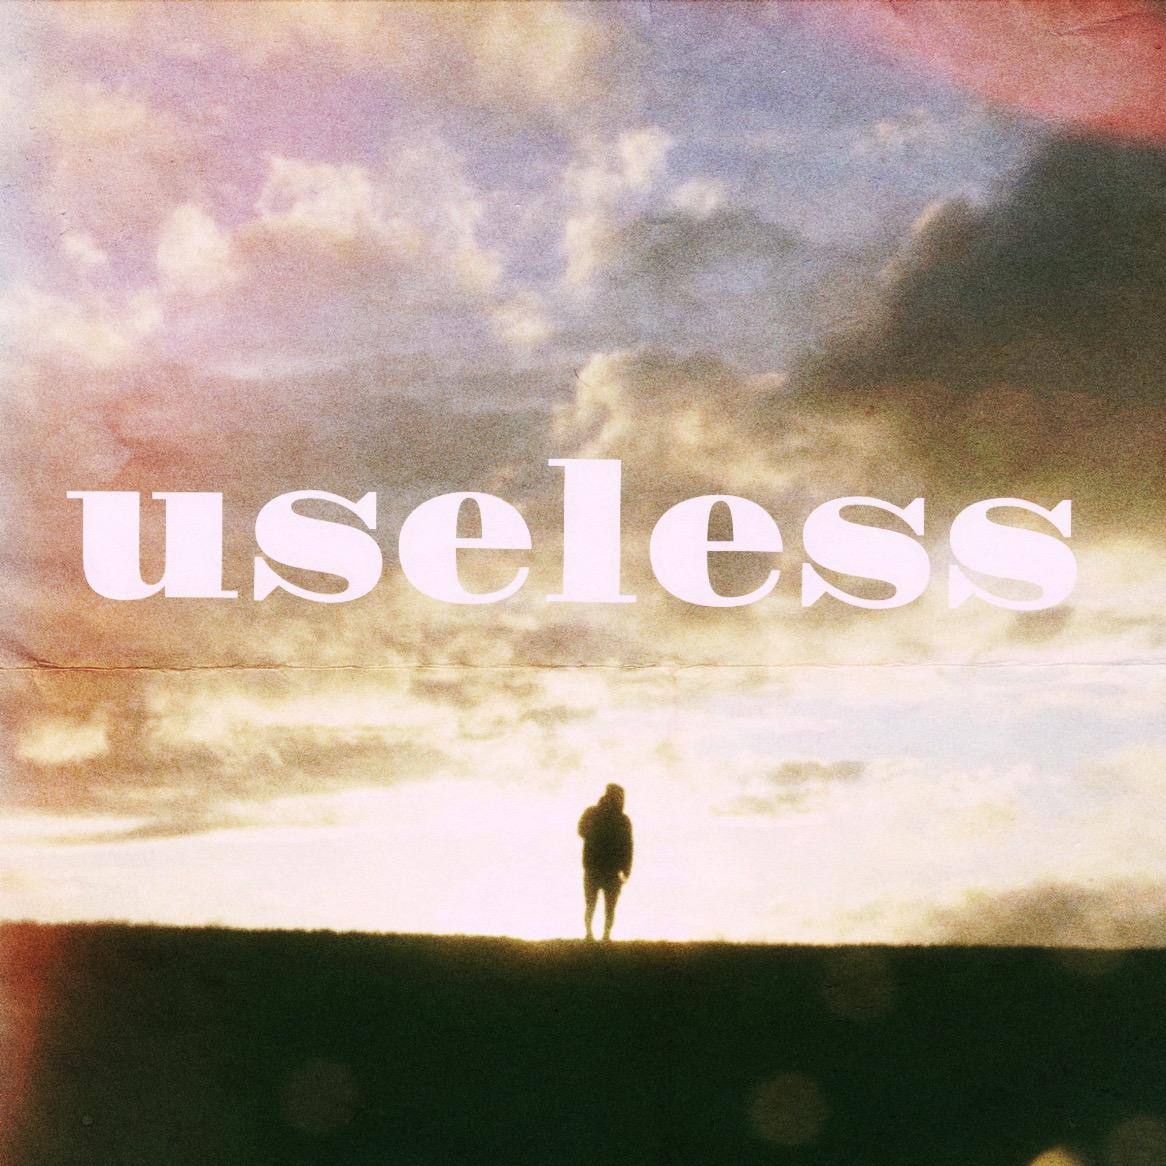 LISTEN: “Useless” by The Palava